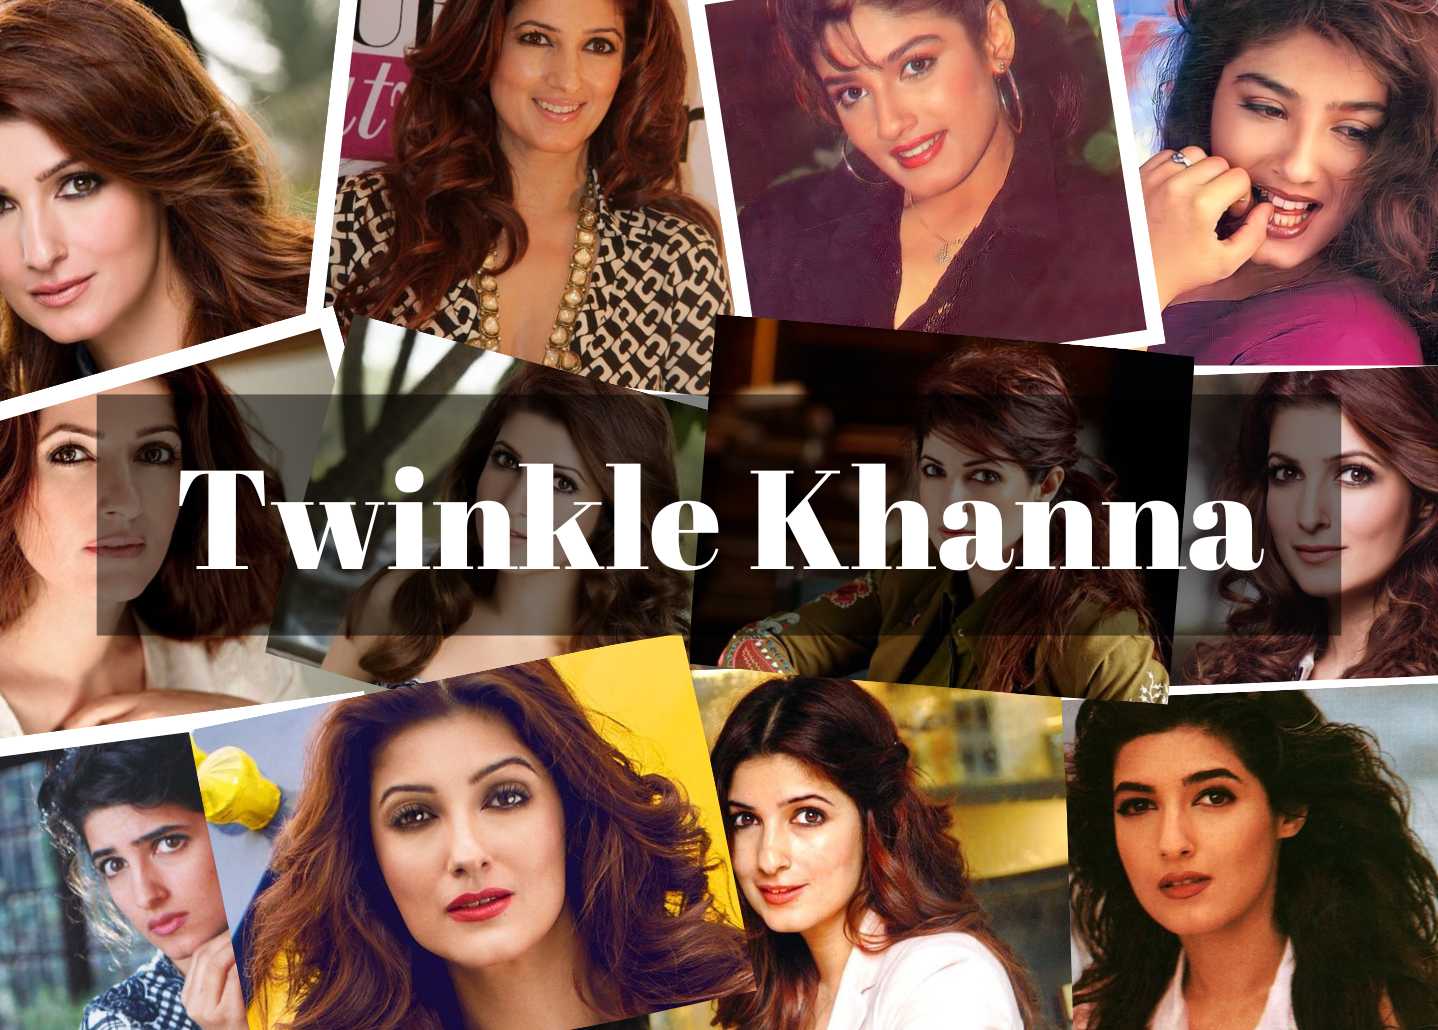 Twinkle Khanna | Movies, Age, Biography, Net Worth, Books